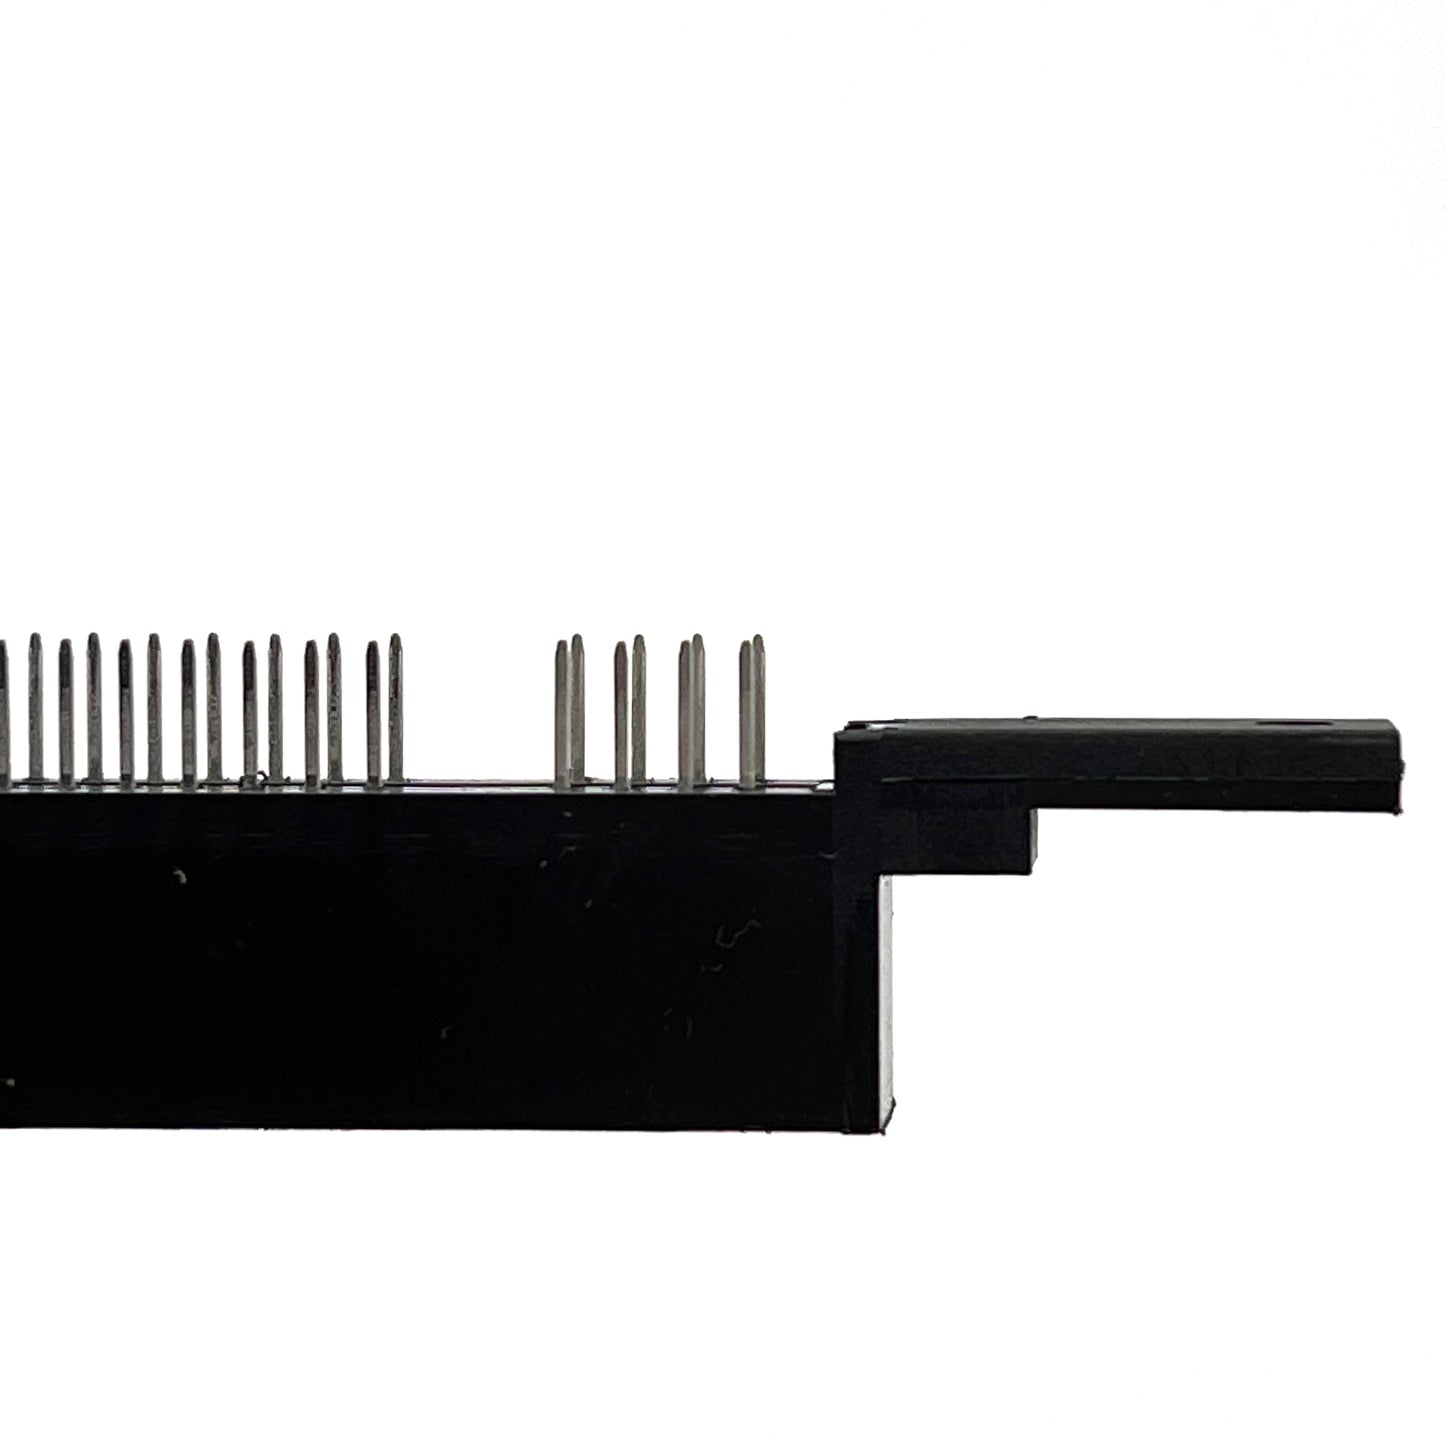 Super Nintendo® (SNES) 62-pin Replacement Cartridge Slot Connector (1pc)